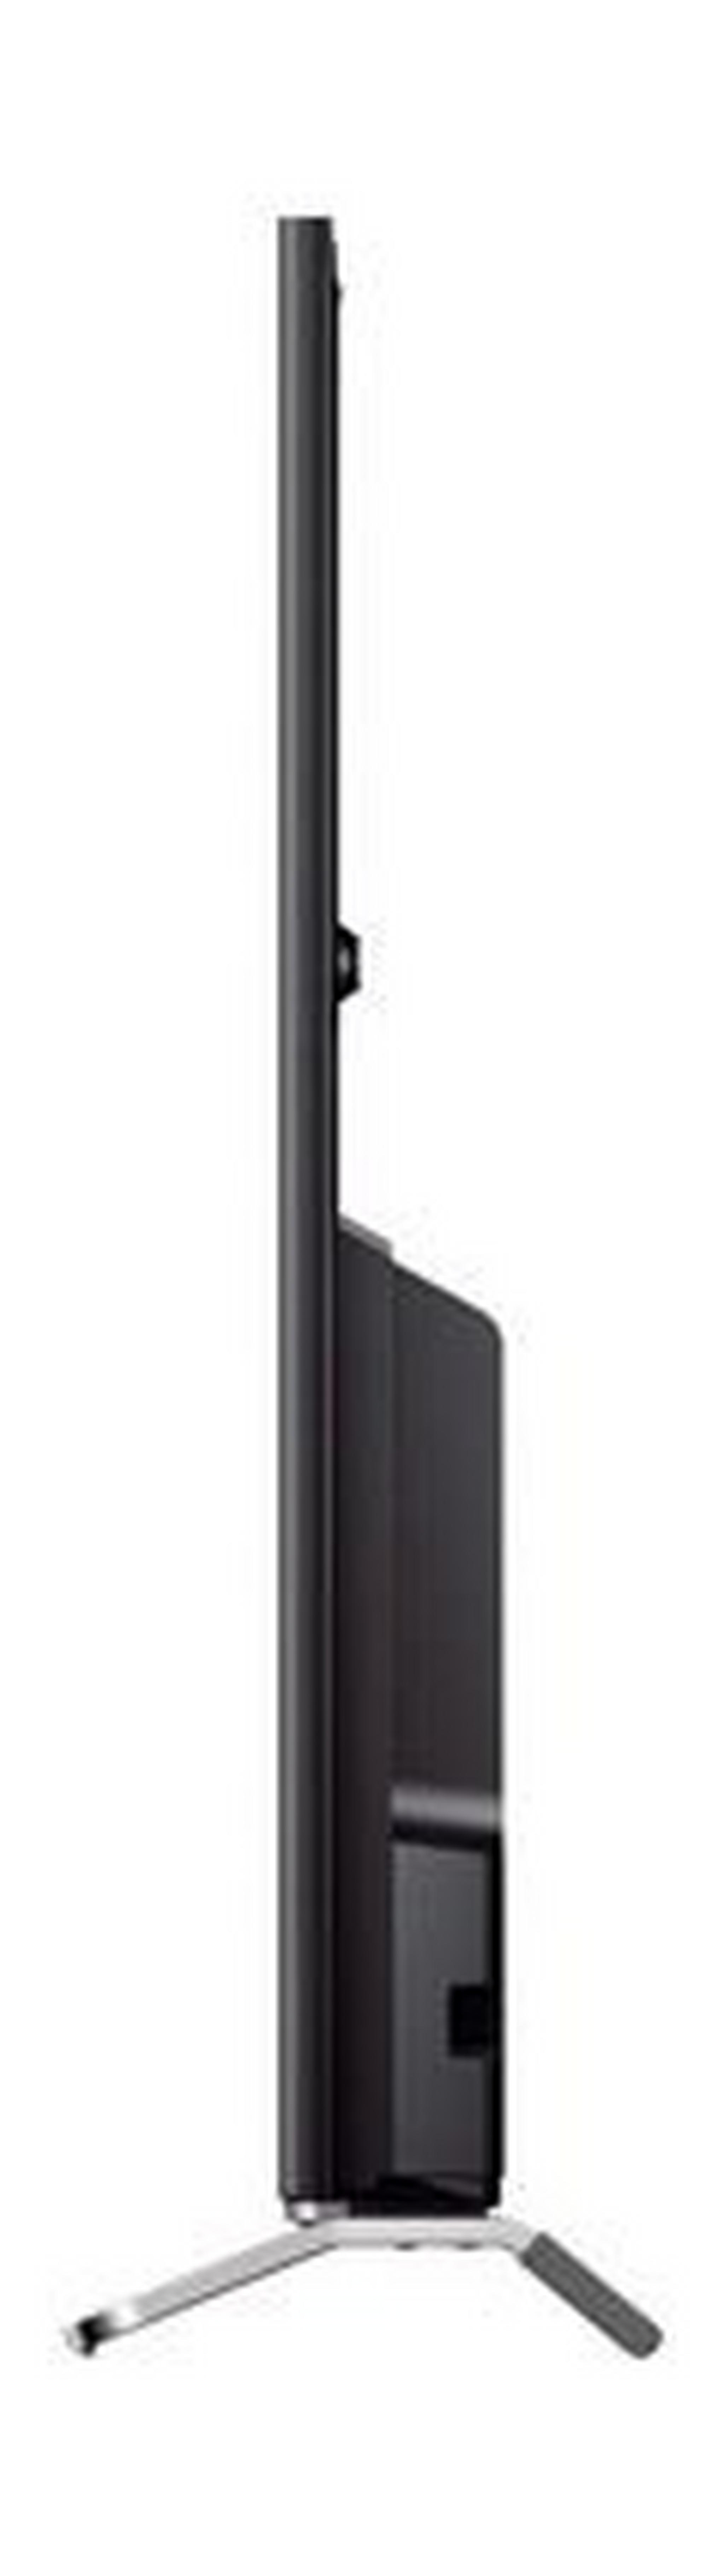 Sony Bravia 42-inch 3D Smart Full-HD LED TV - Black KDL-42W800B